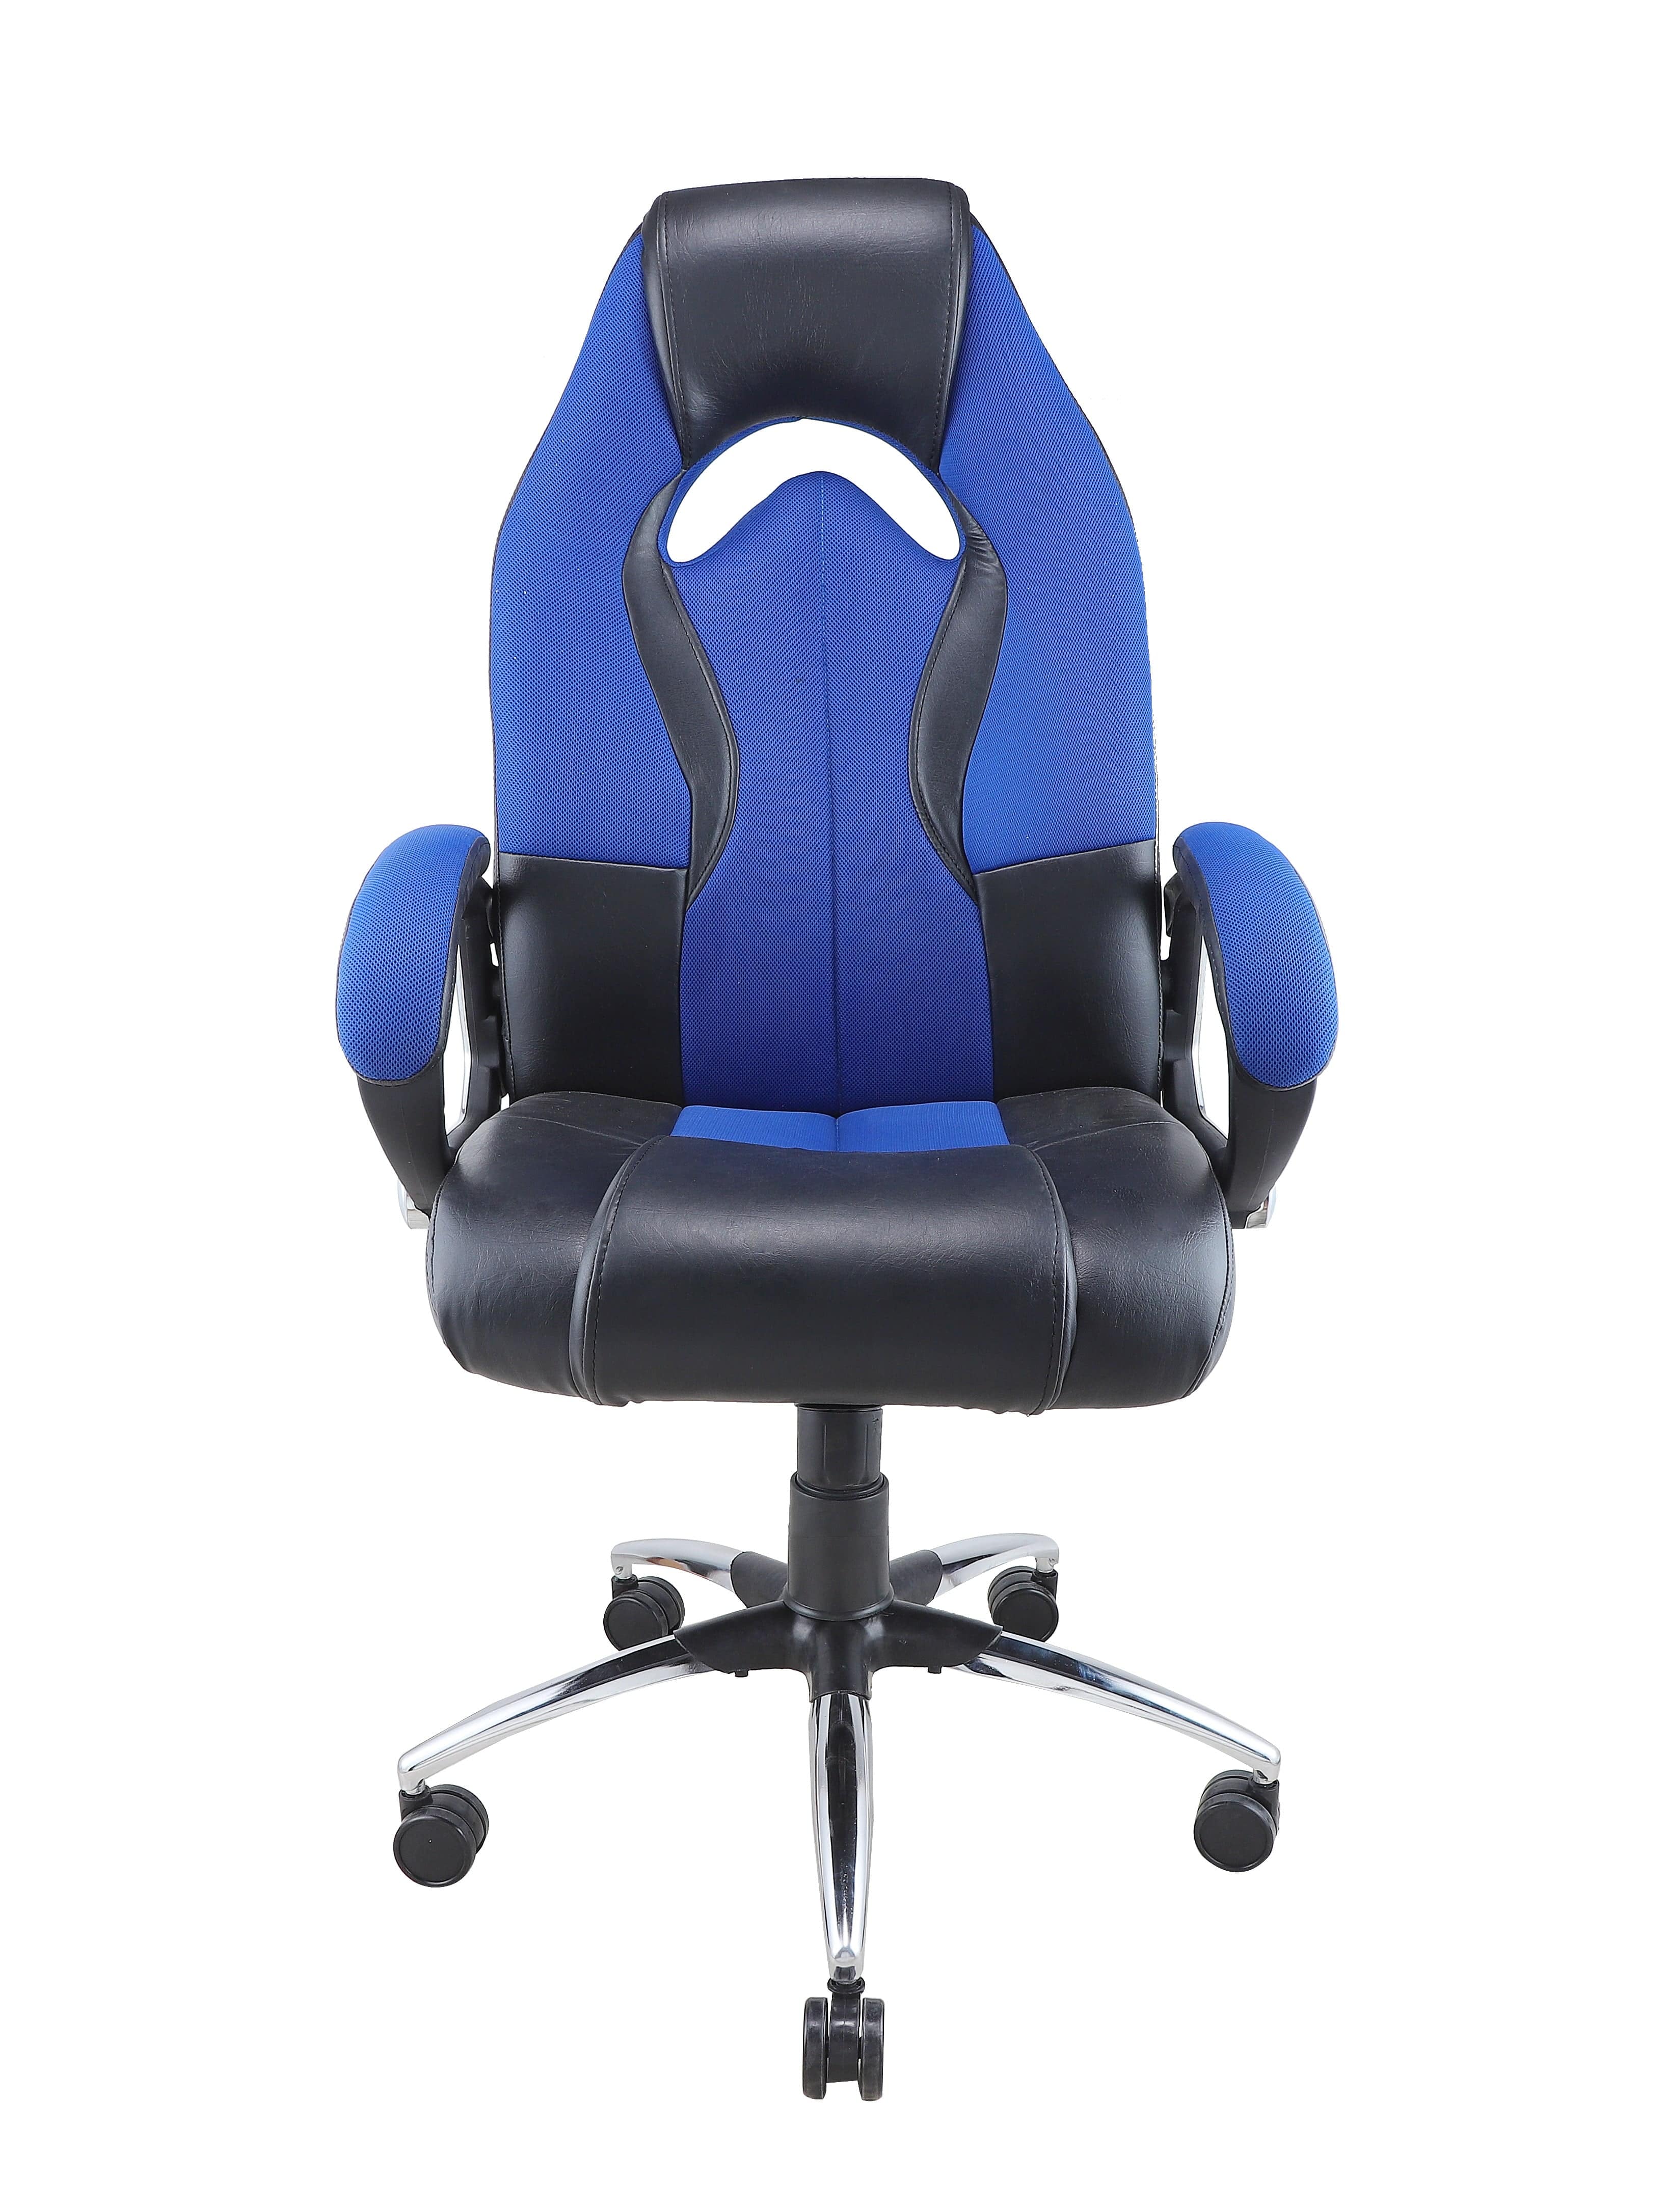 Adiko Designer Gaming Chair in Blue